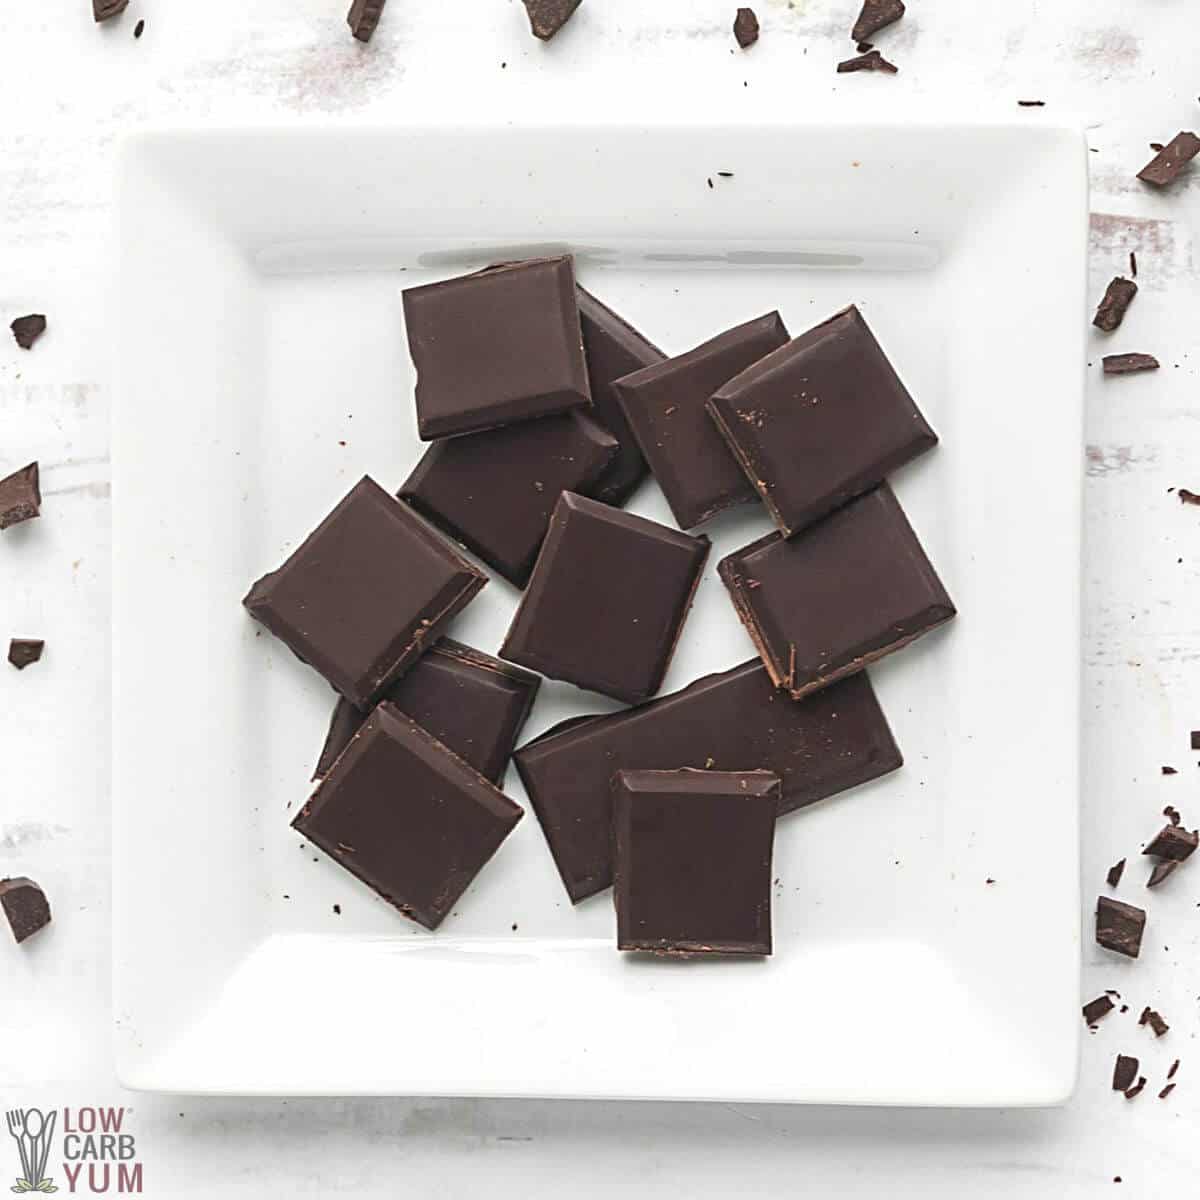 keto dark chocolate on square white plate.